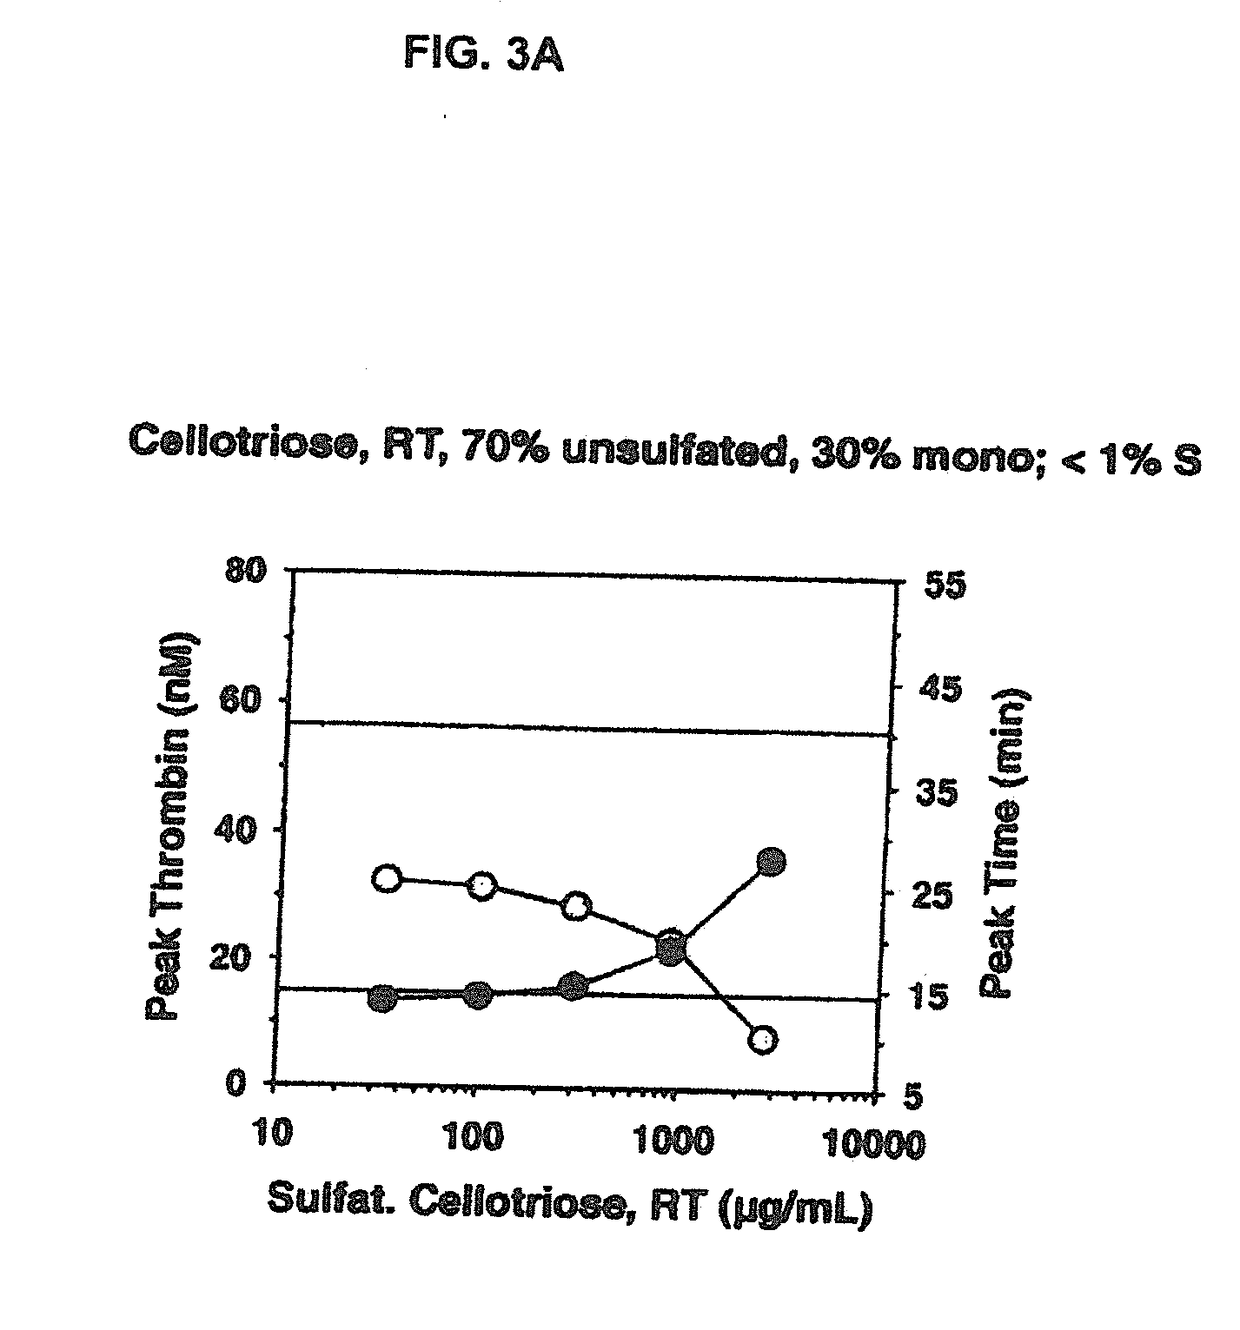 Non-anticoagulant sulfated or sulfonated polysaccharides